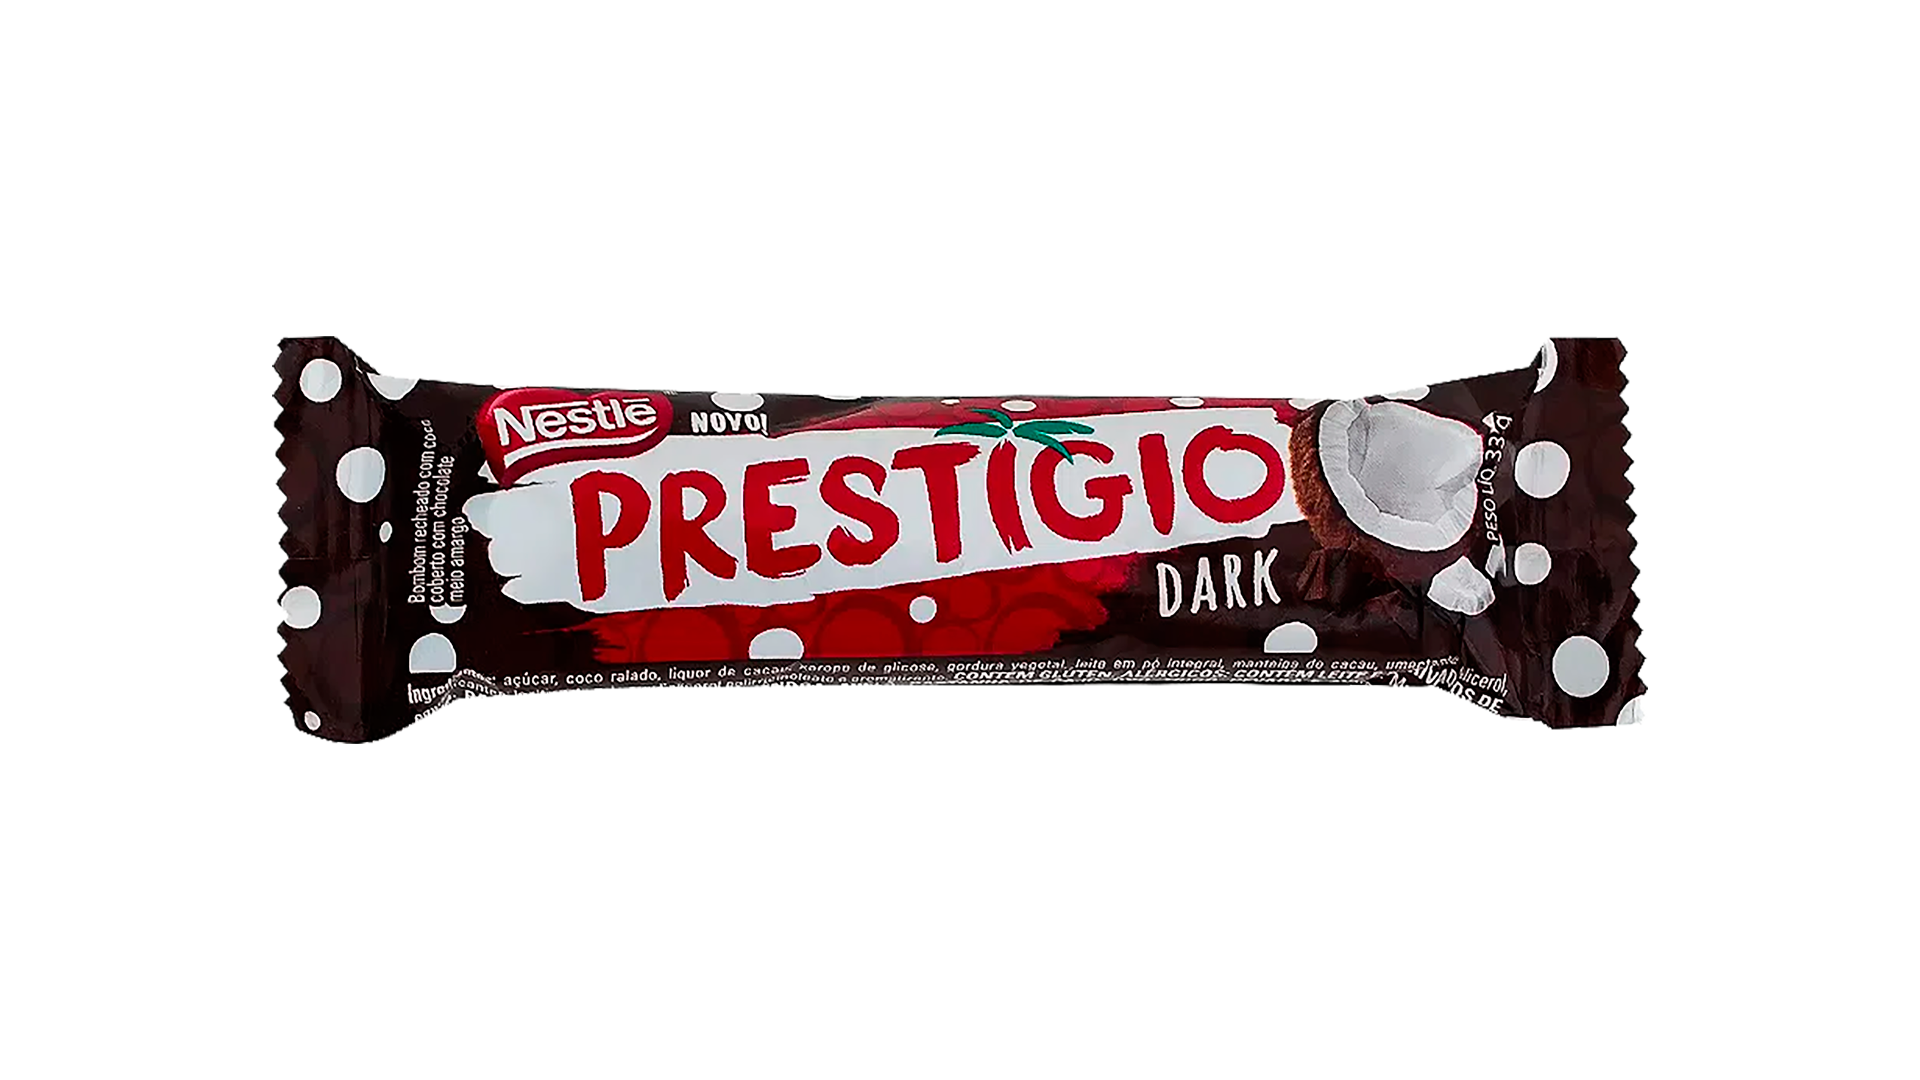 NESTLE - "Prestigio" DARK Chocolate Bar - 30g - FINAL SALE - EXPIRED or CLOSE TO EXPIRY